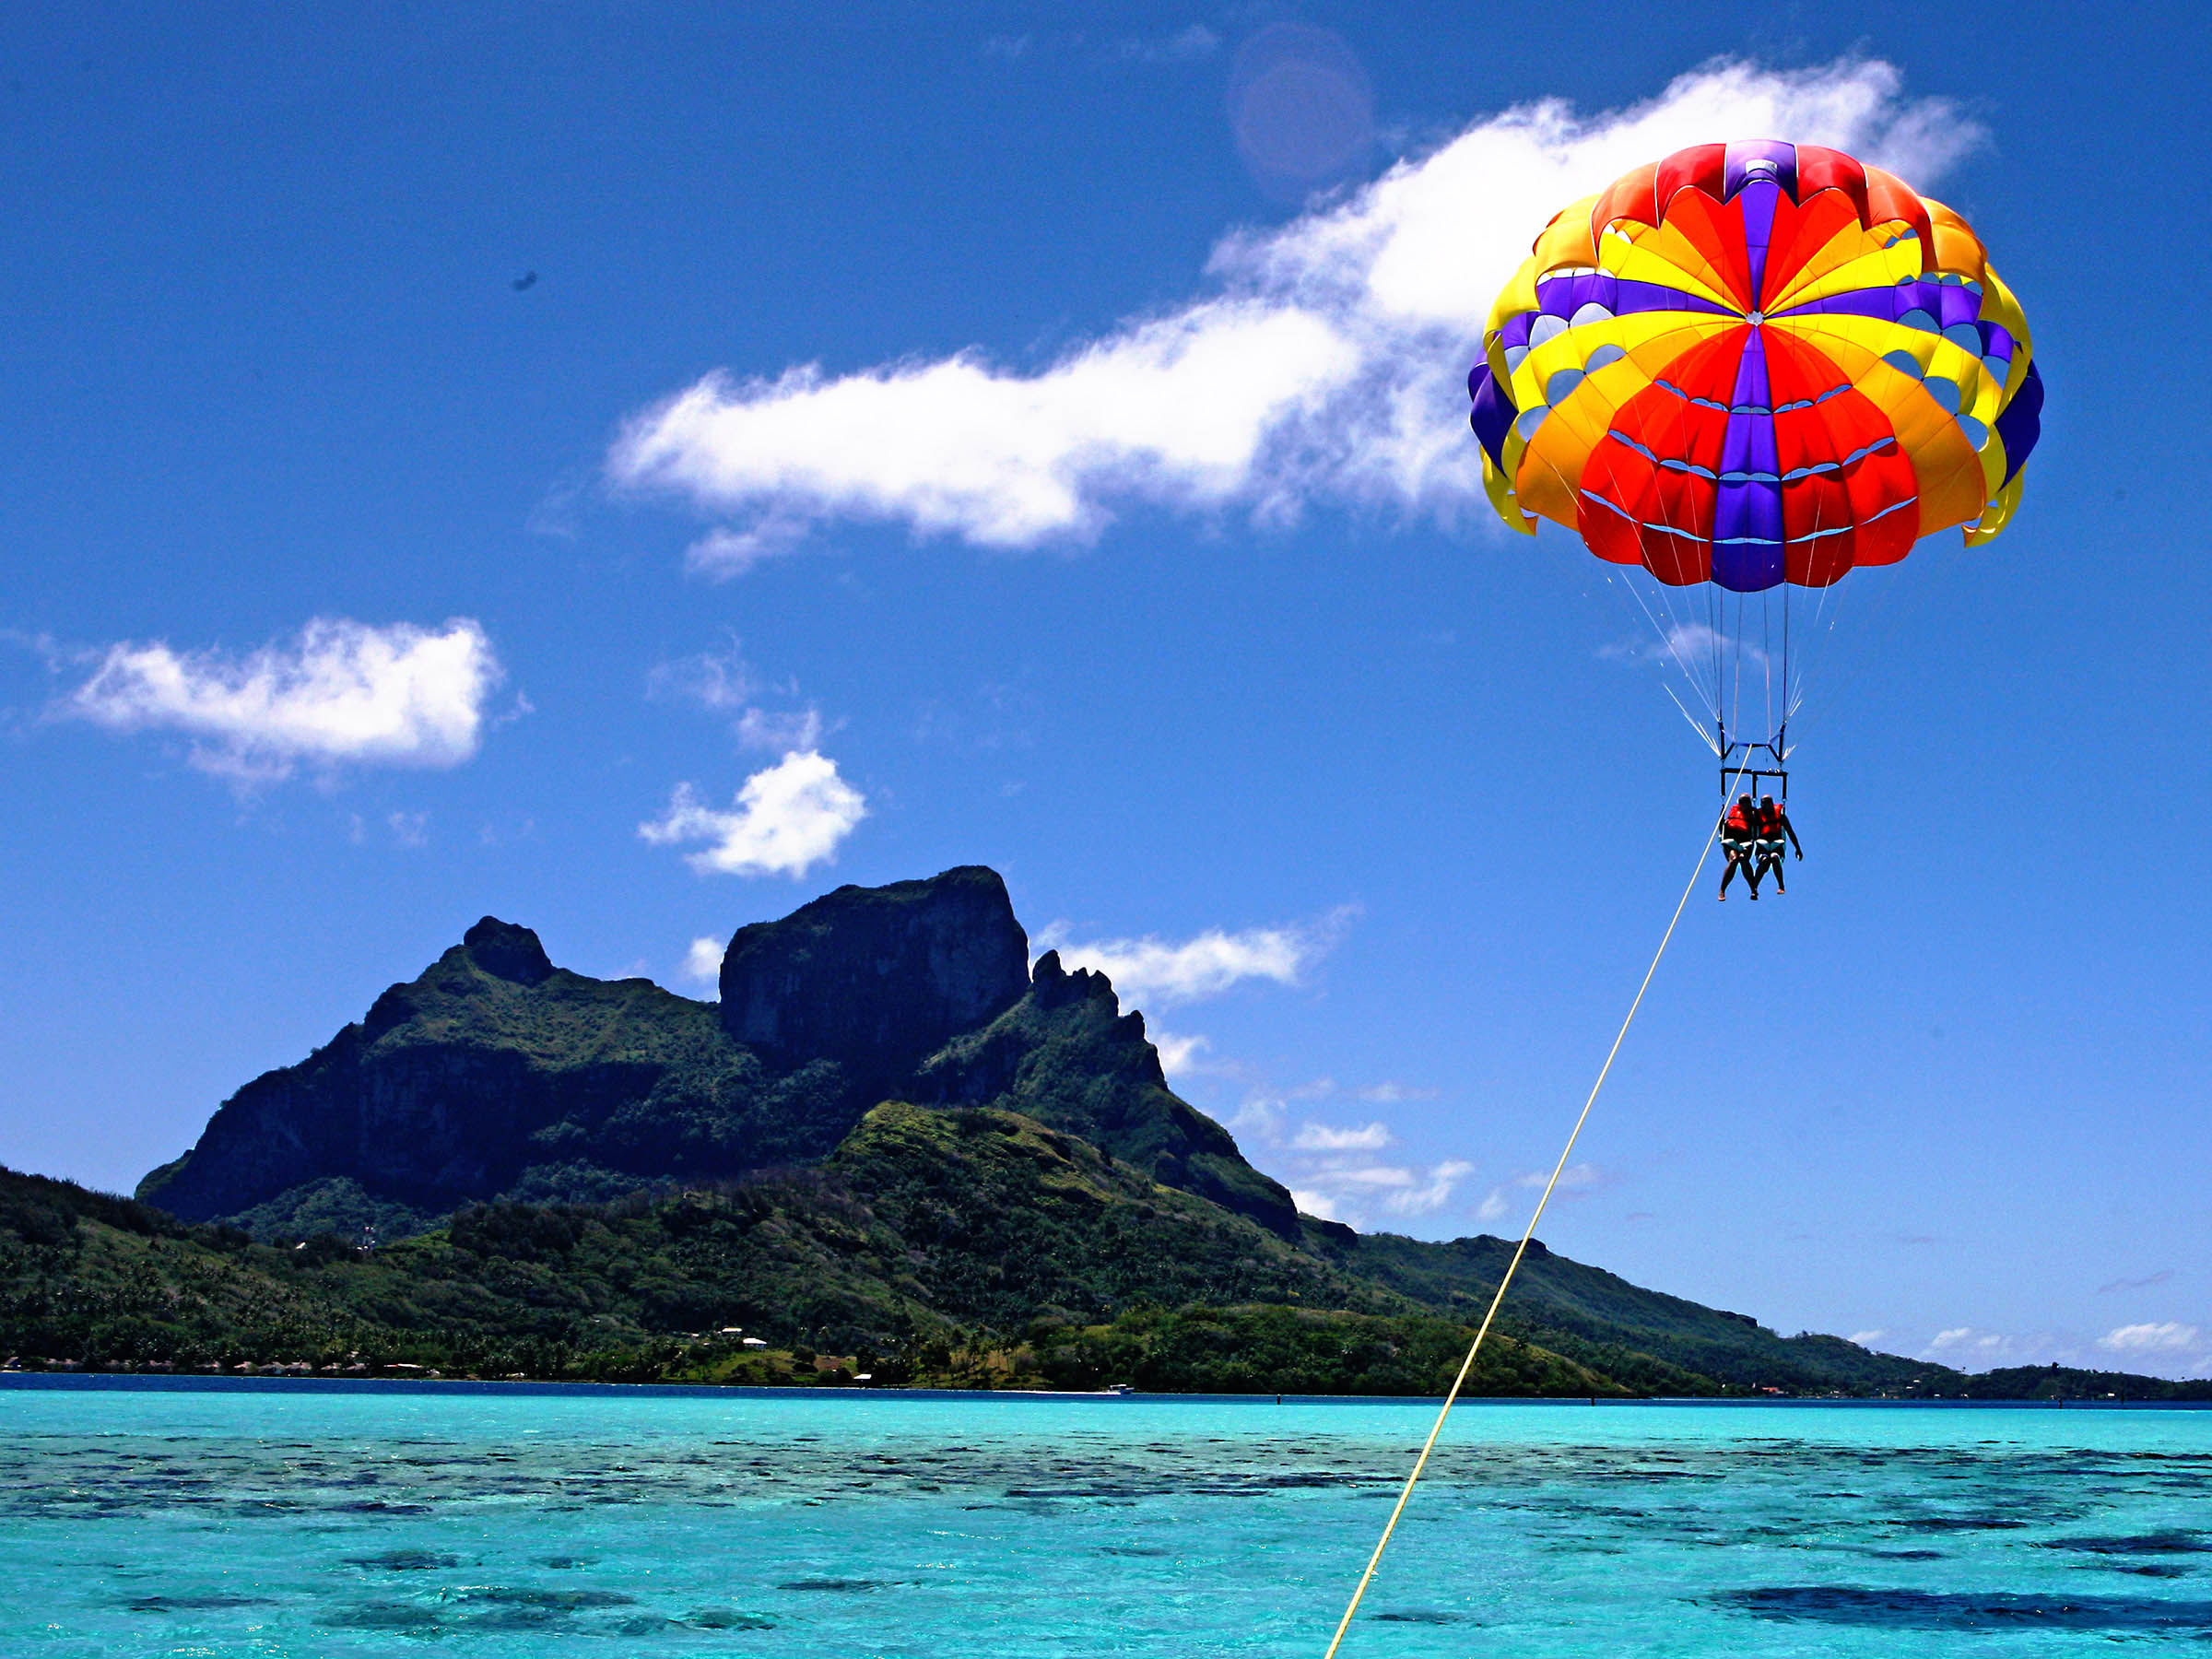 Parasailing: Bora Bora, A life vest, Safety precaution, To parasail with a partner. 2400x1800 HD Wallpaper.